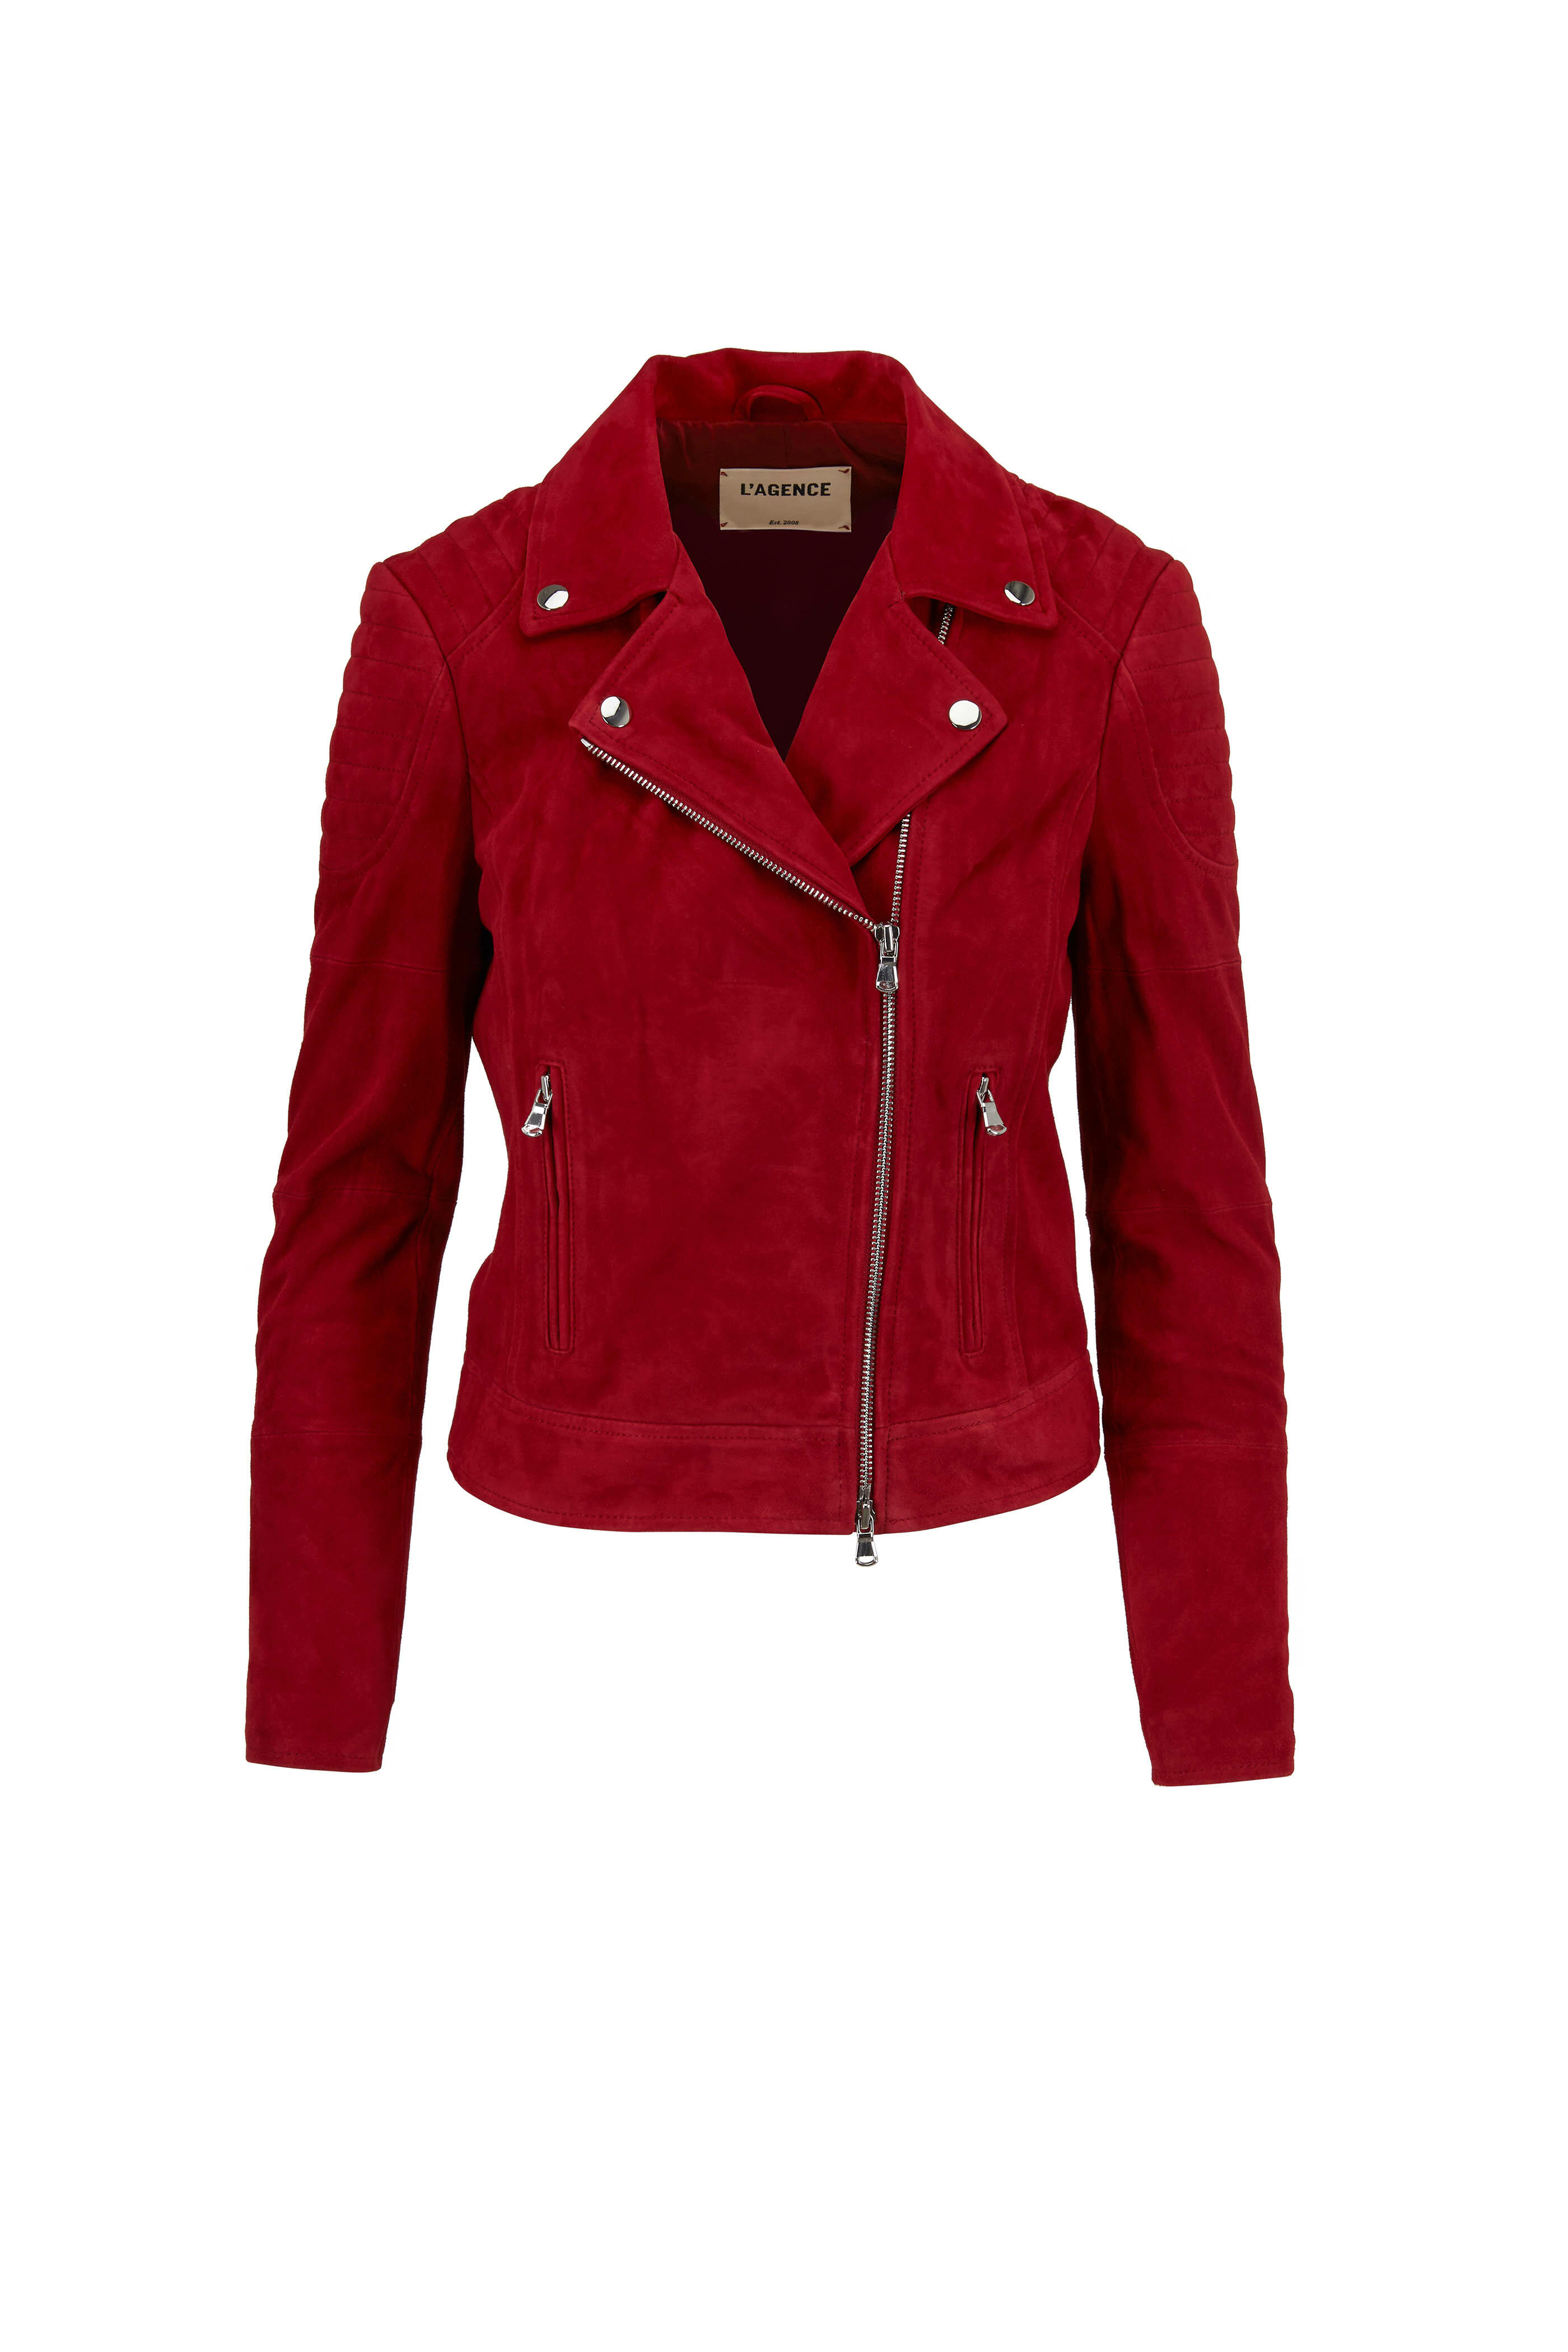 L'Agence - Ryder Roadster Red Suede Jacket | Stores